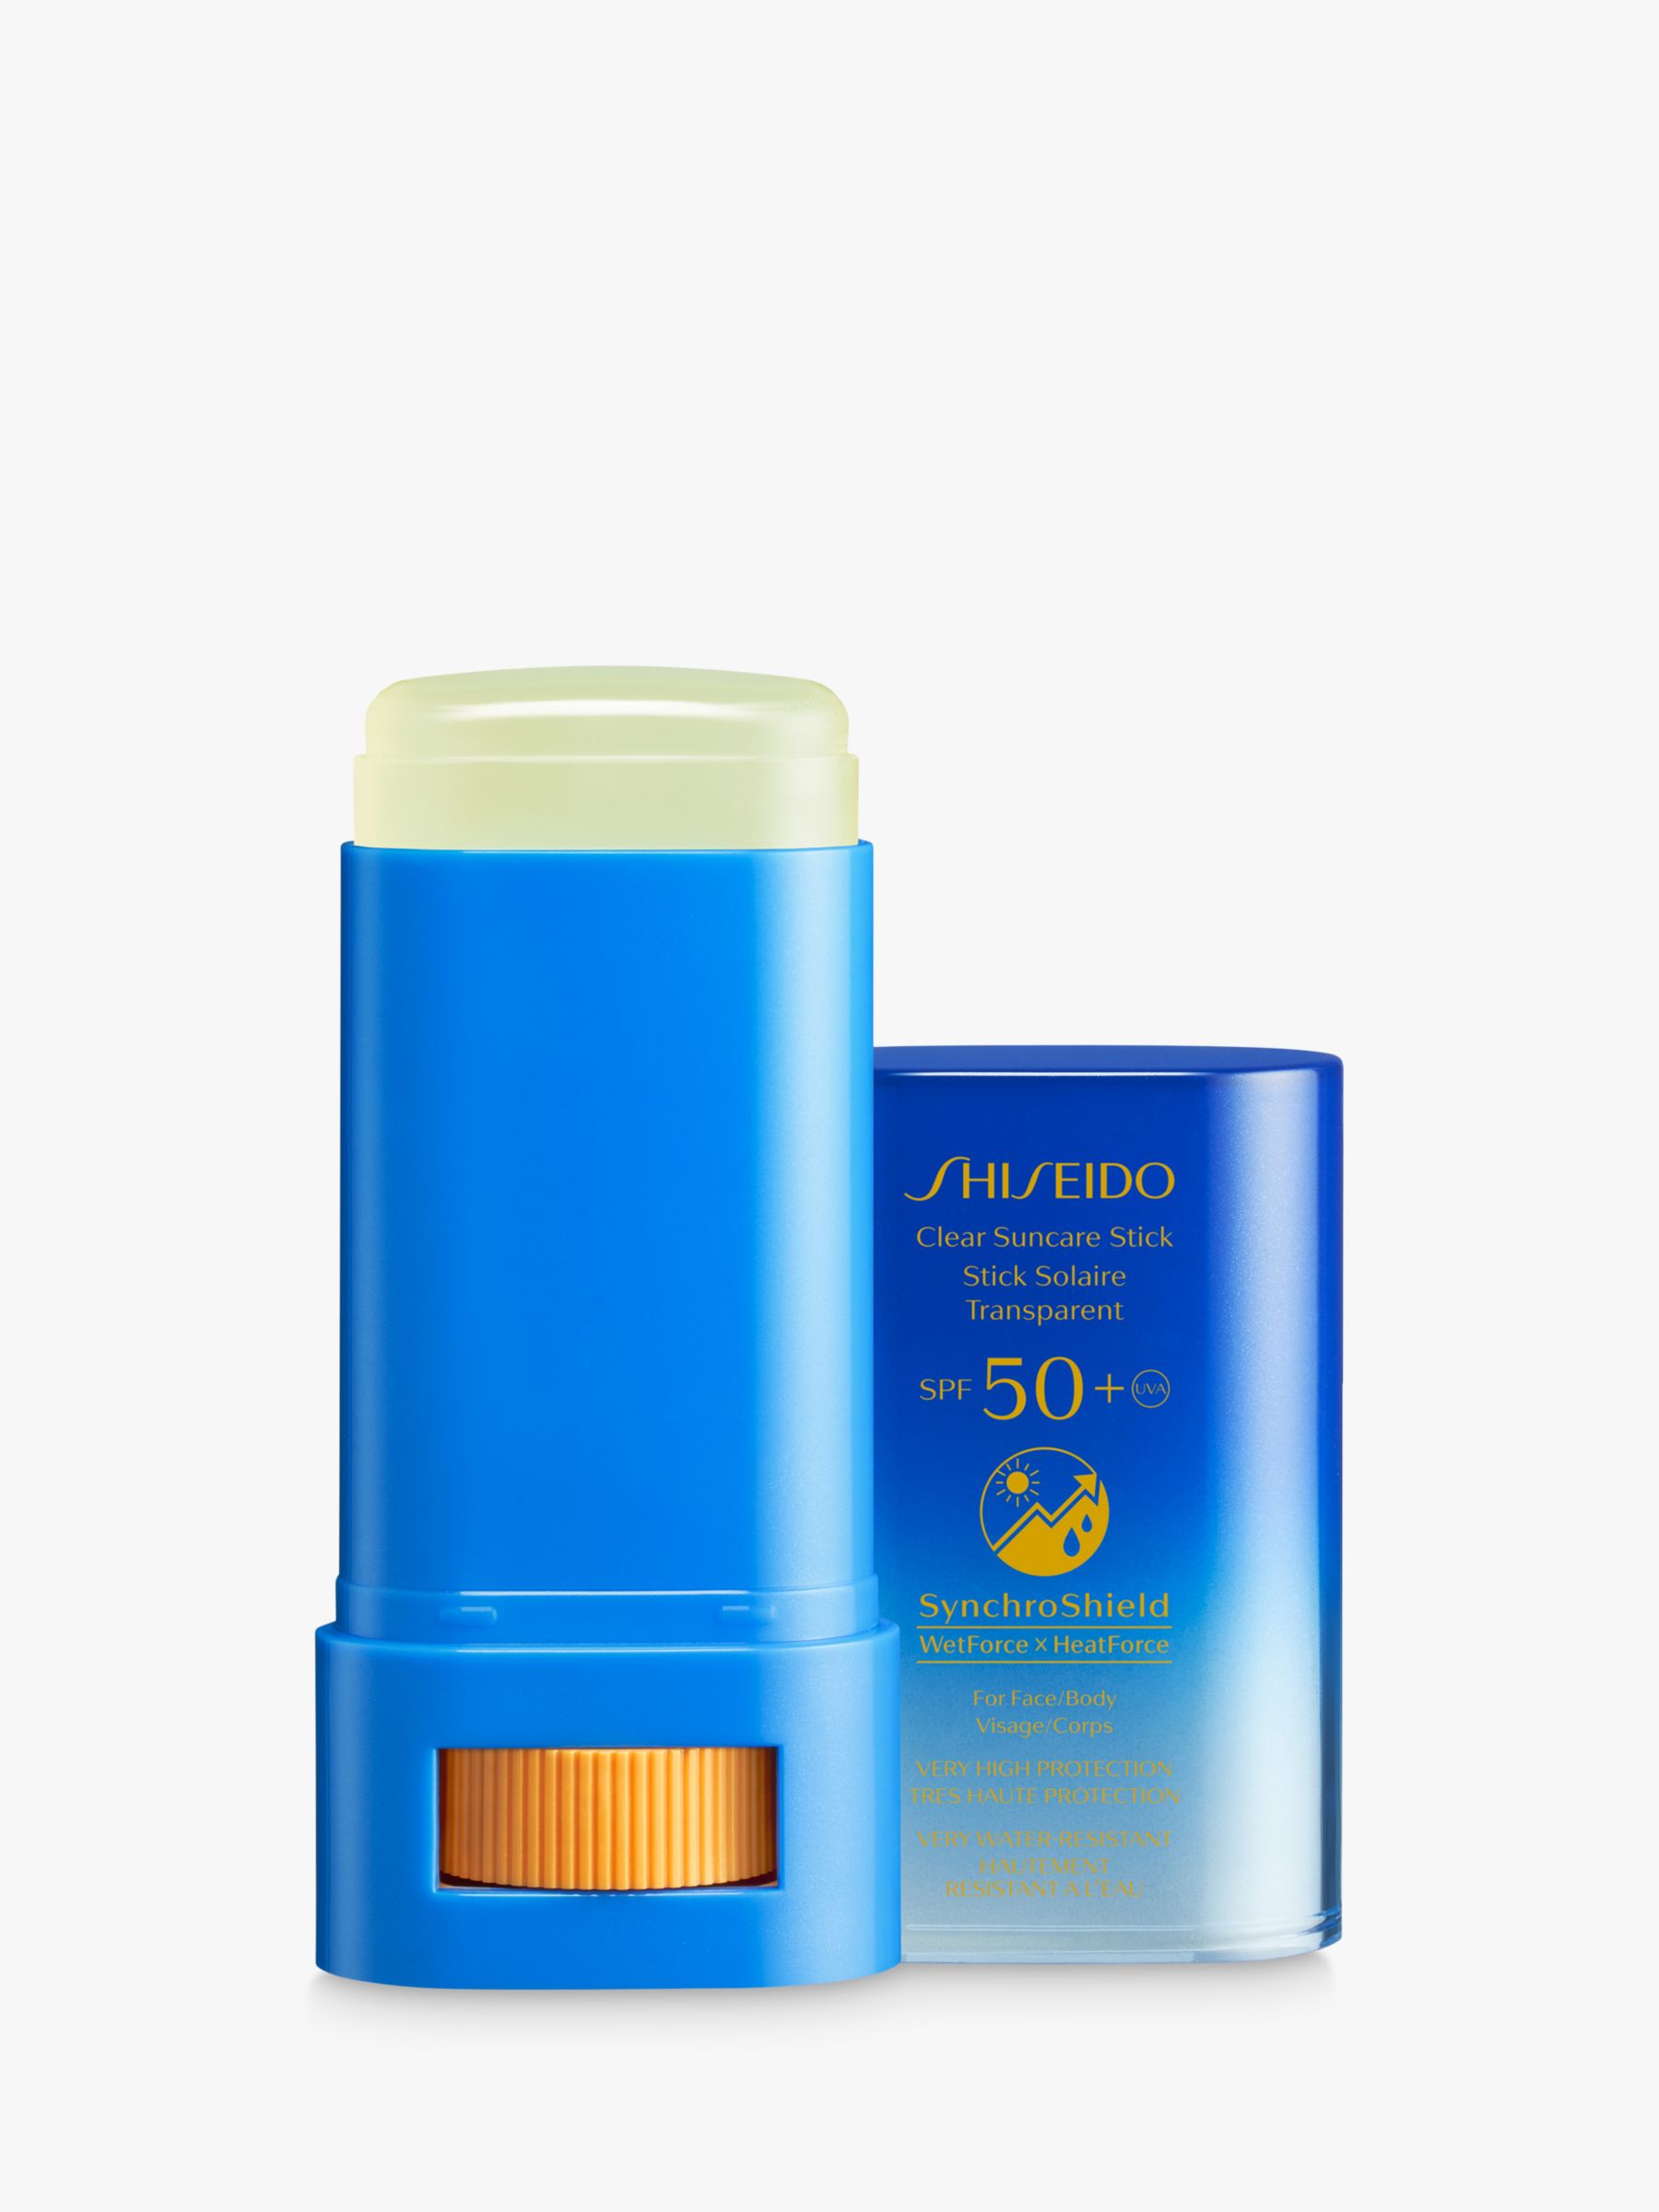 Shiseido Clear Suncare Stick SPF 50+, 20g 2